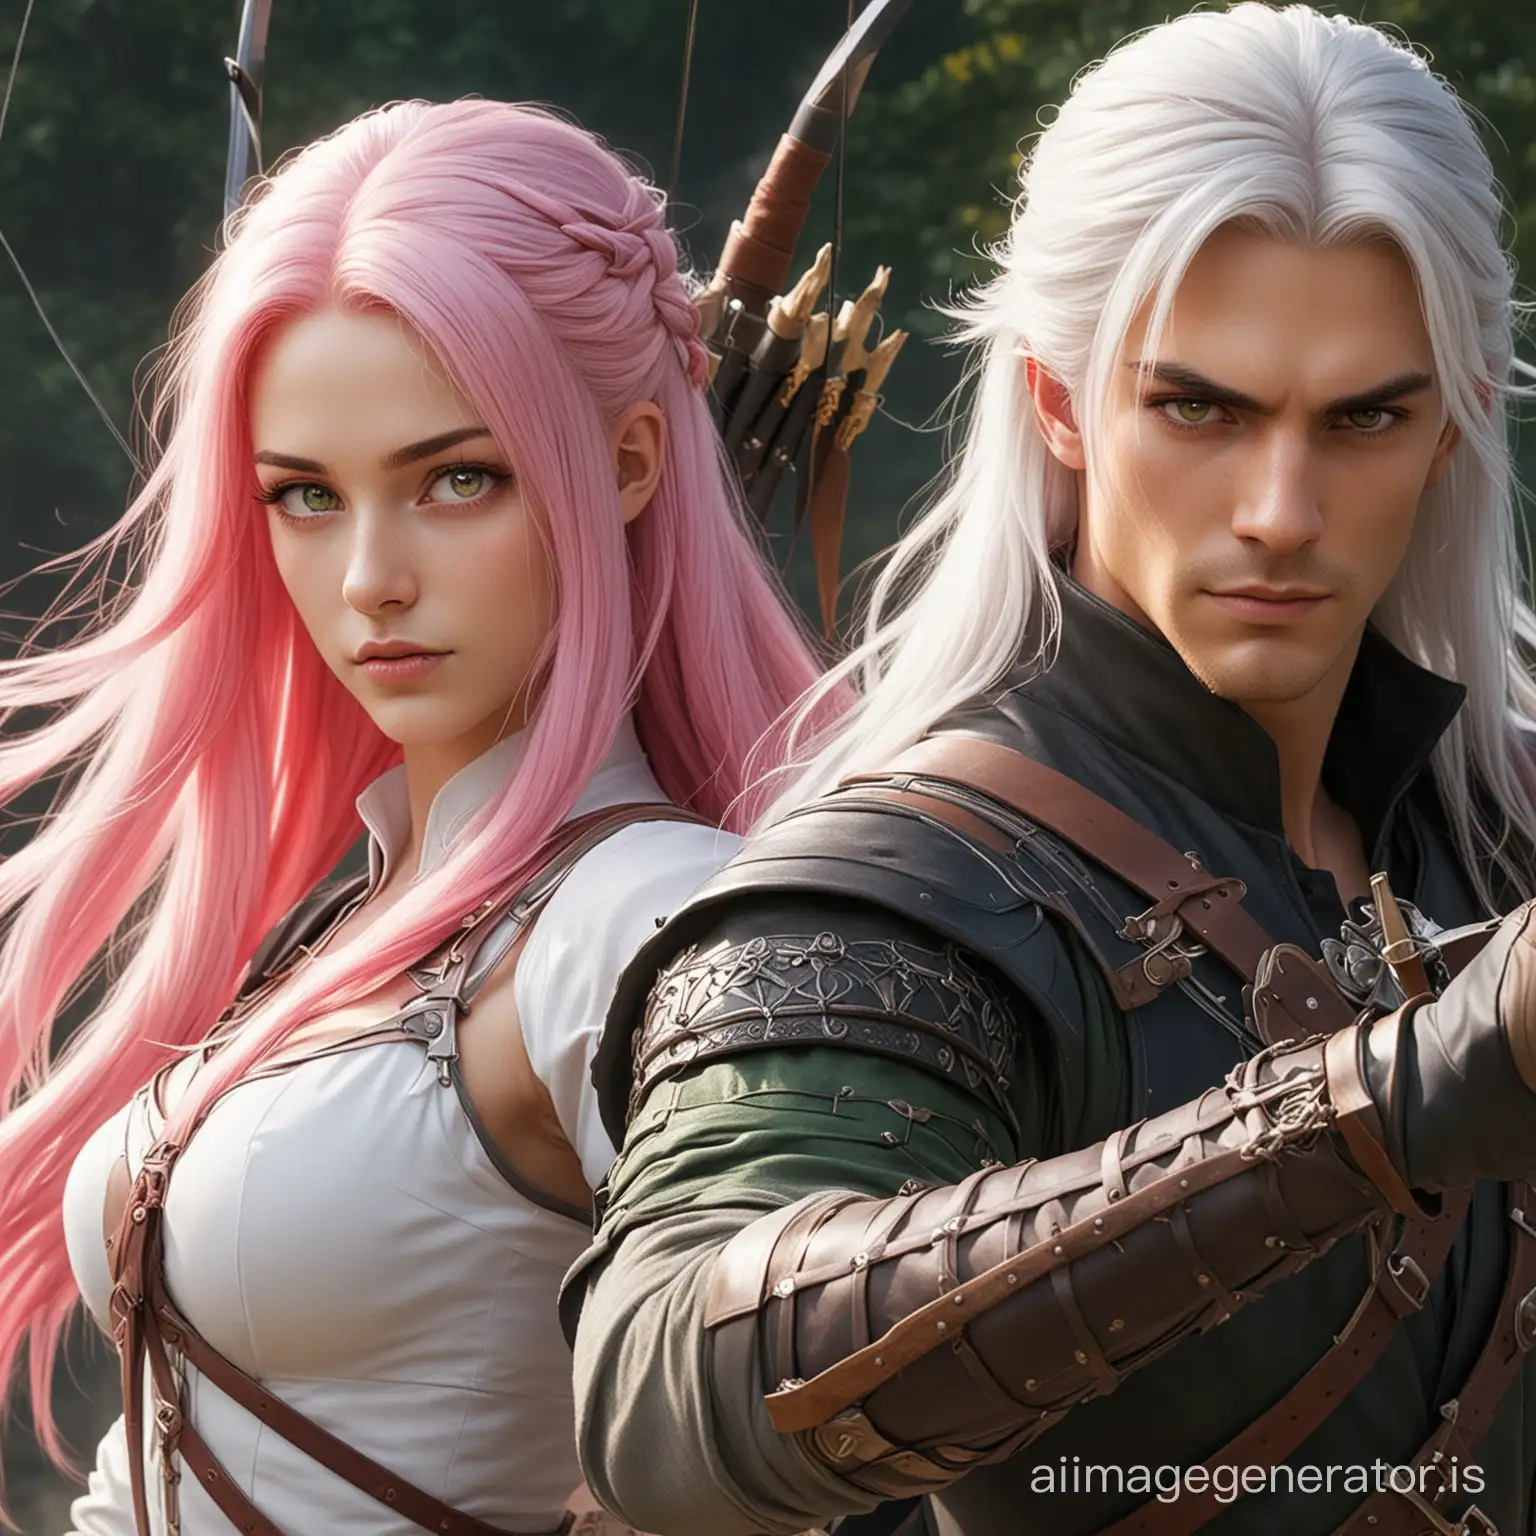 Archer-Woman-and-Swordsman-Man-in-Fantasy-Battle